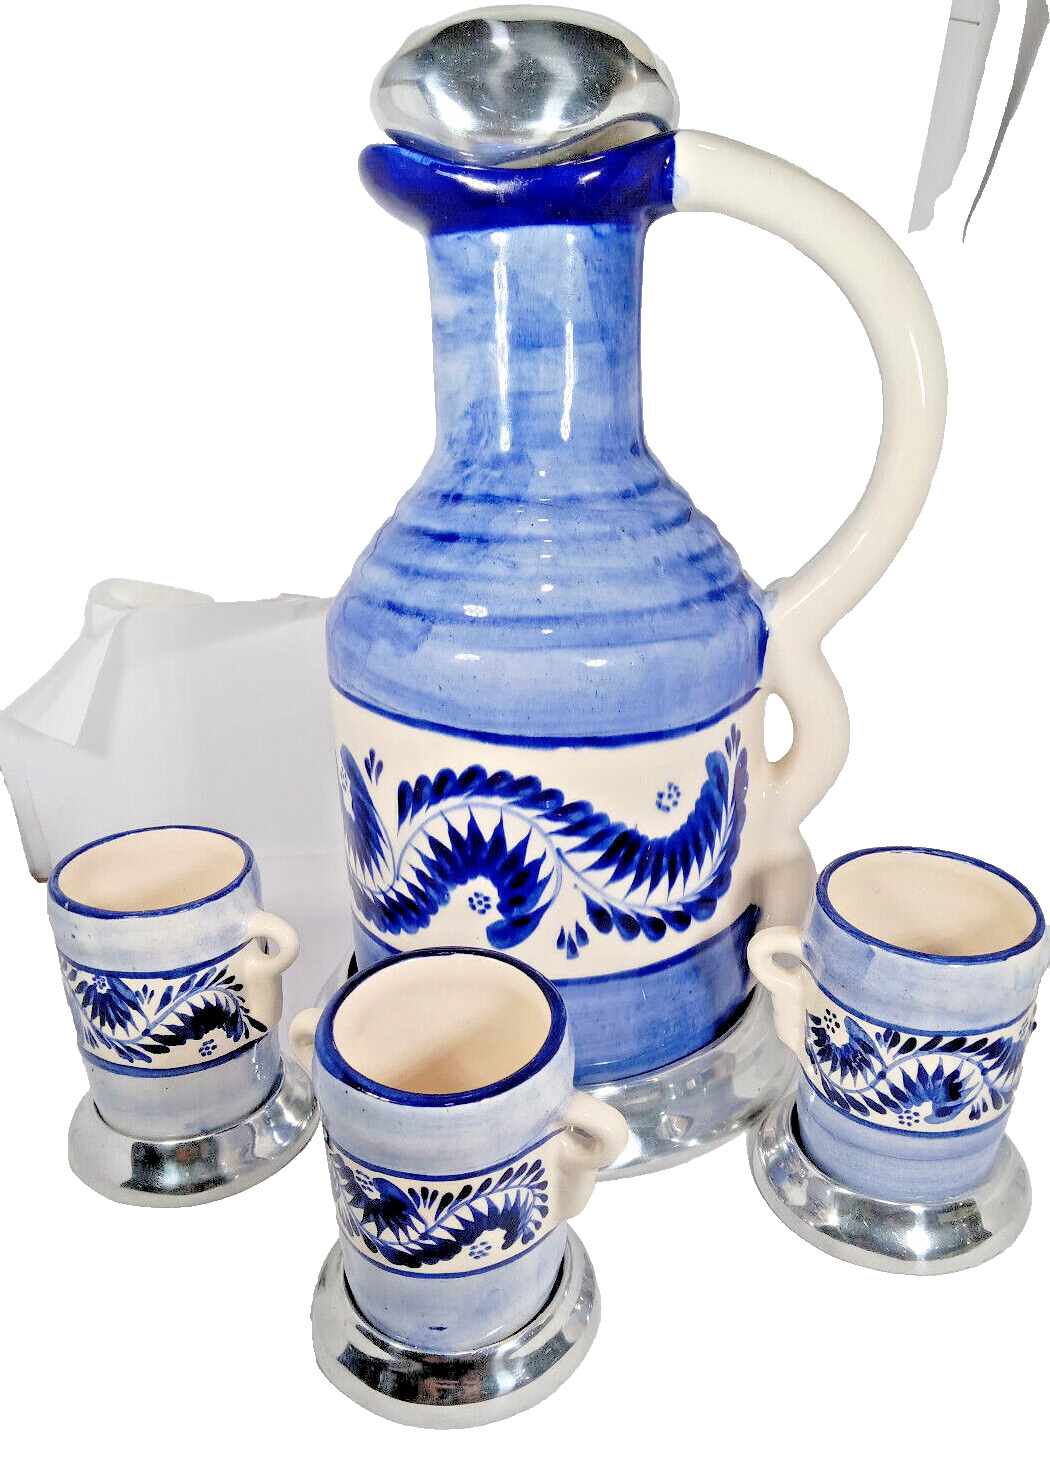 Coffee Pot Pitcher cups 5 pcs Mexico handmade vintage metal stopper Regalos blue